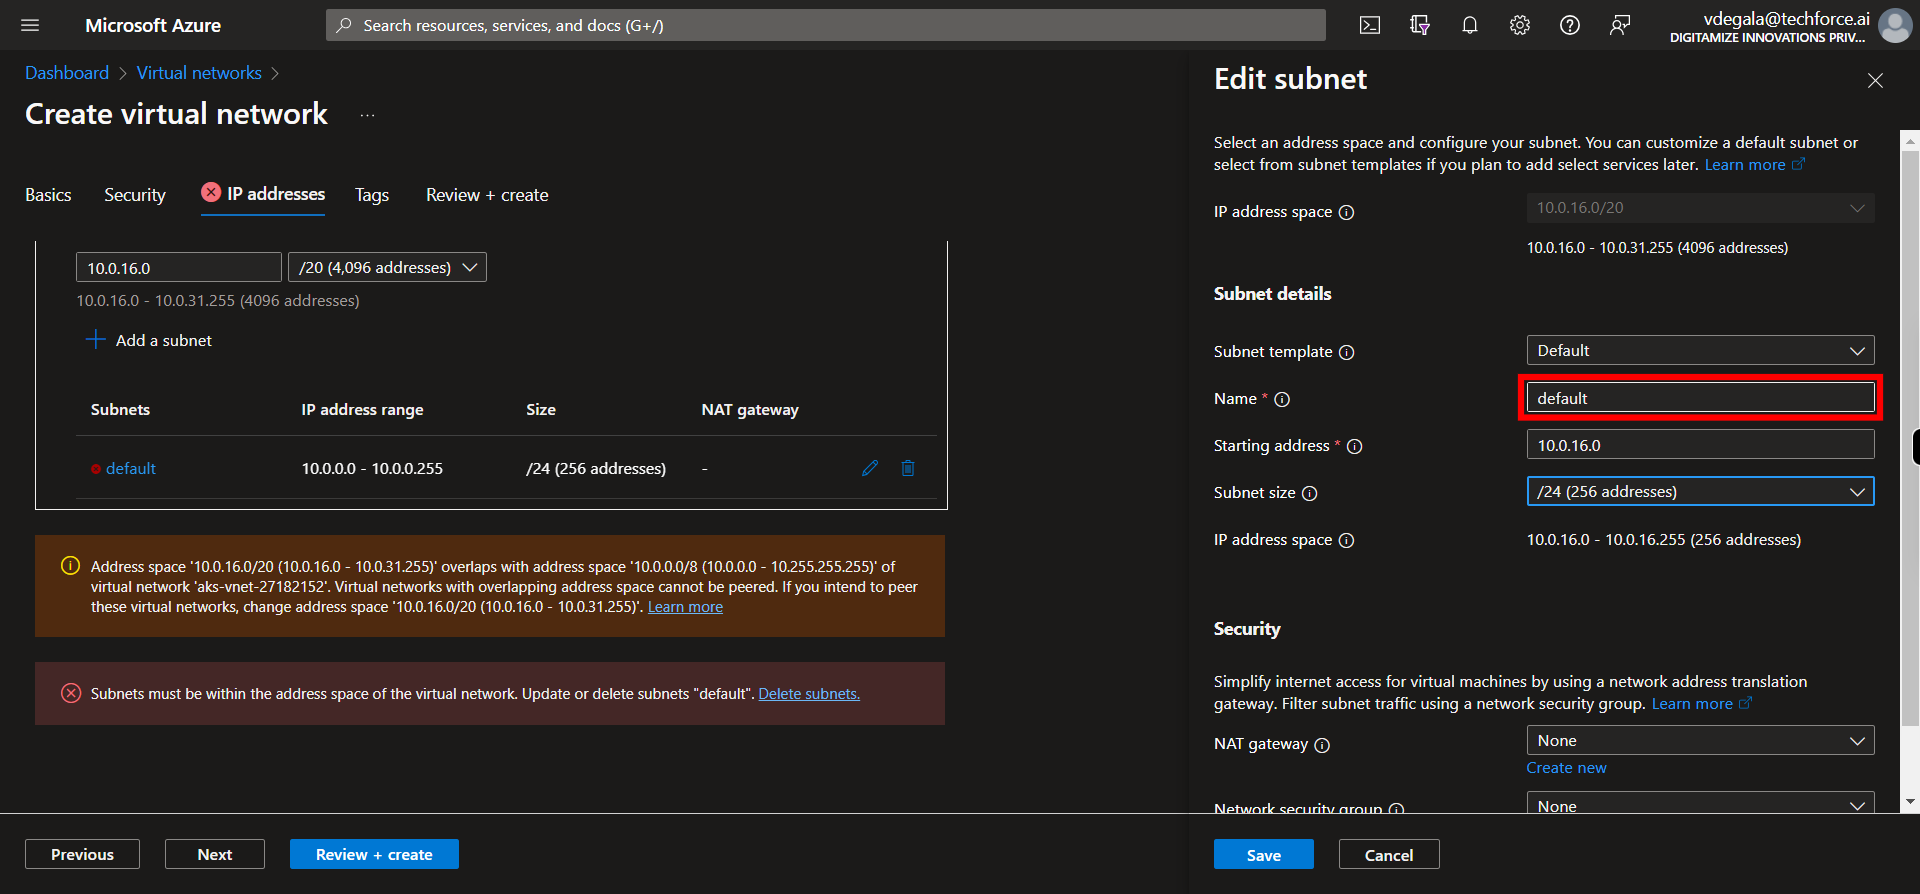 Edit subnet - Microsoft Azure